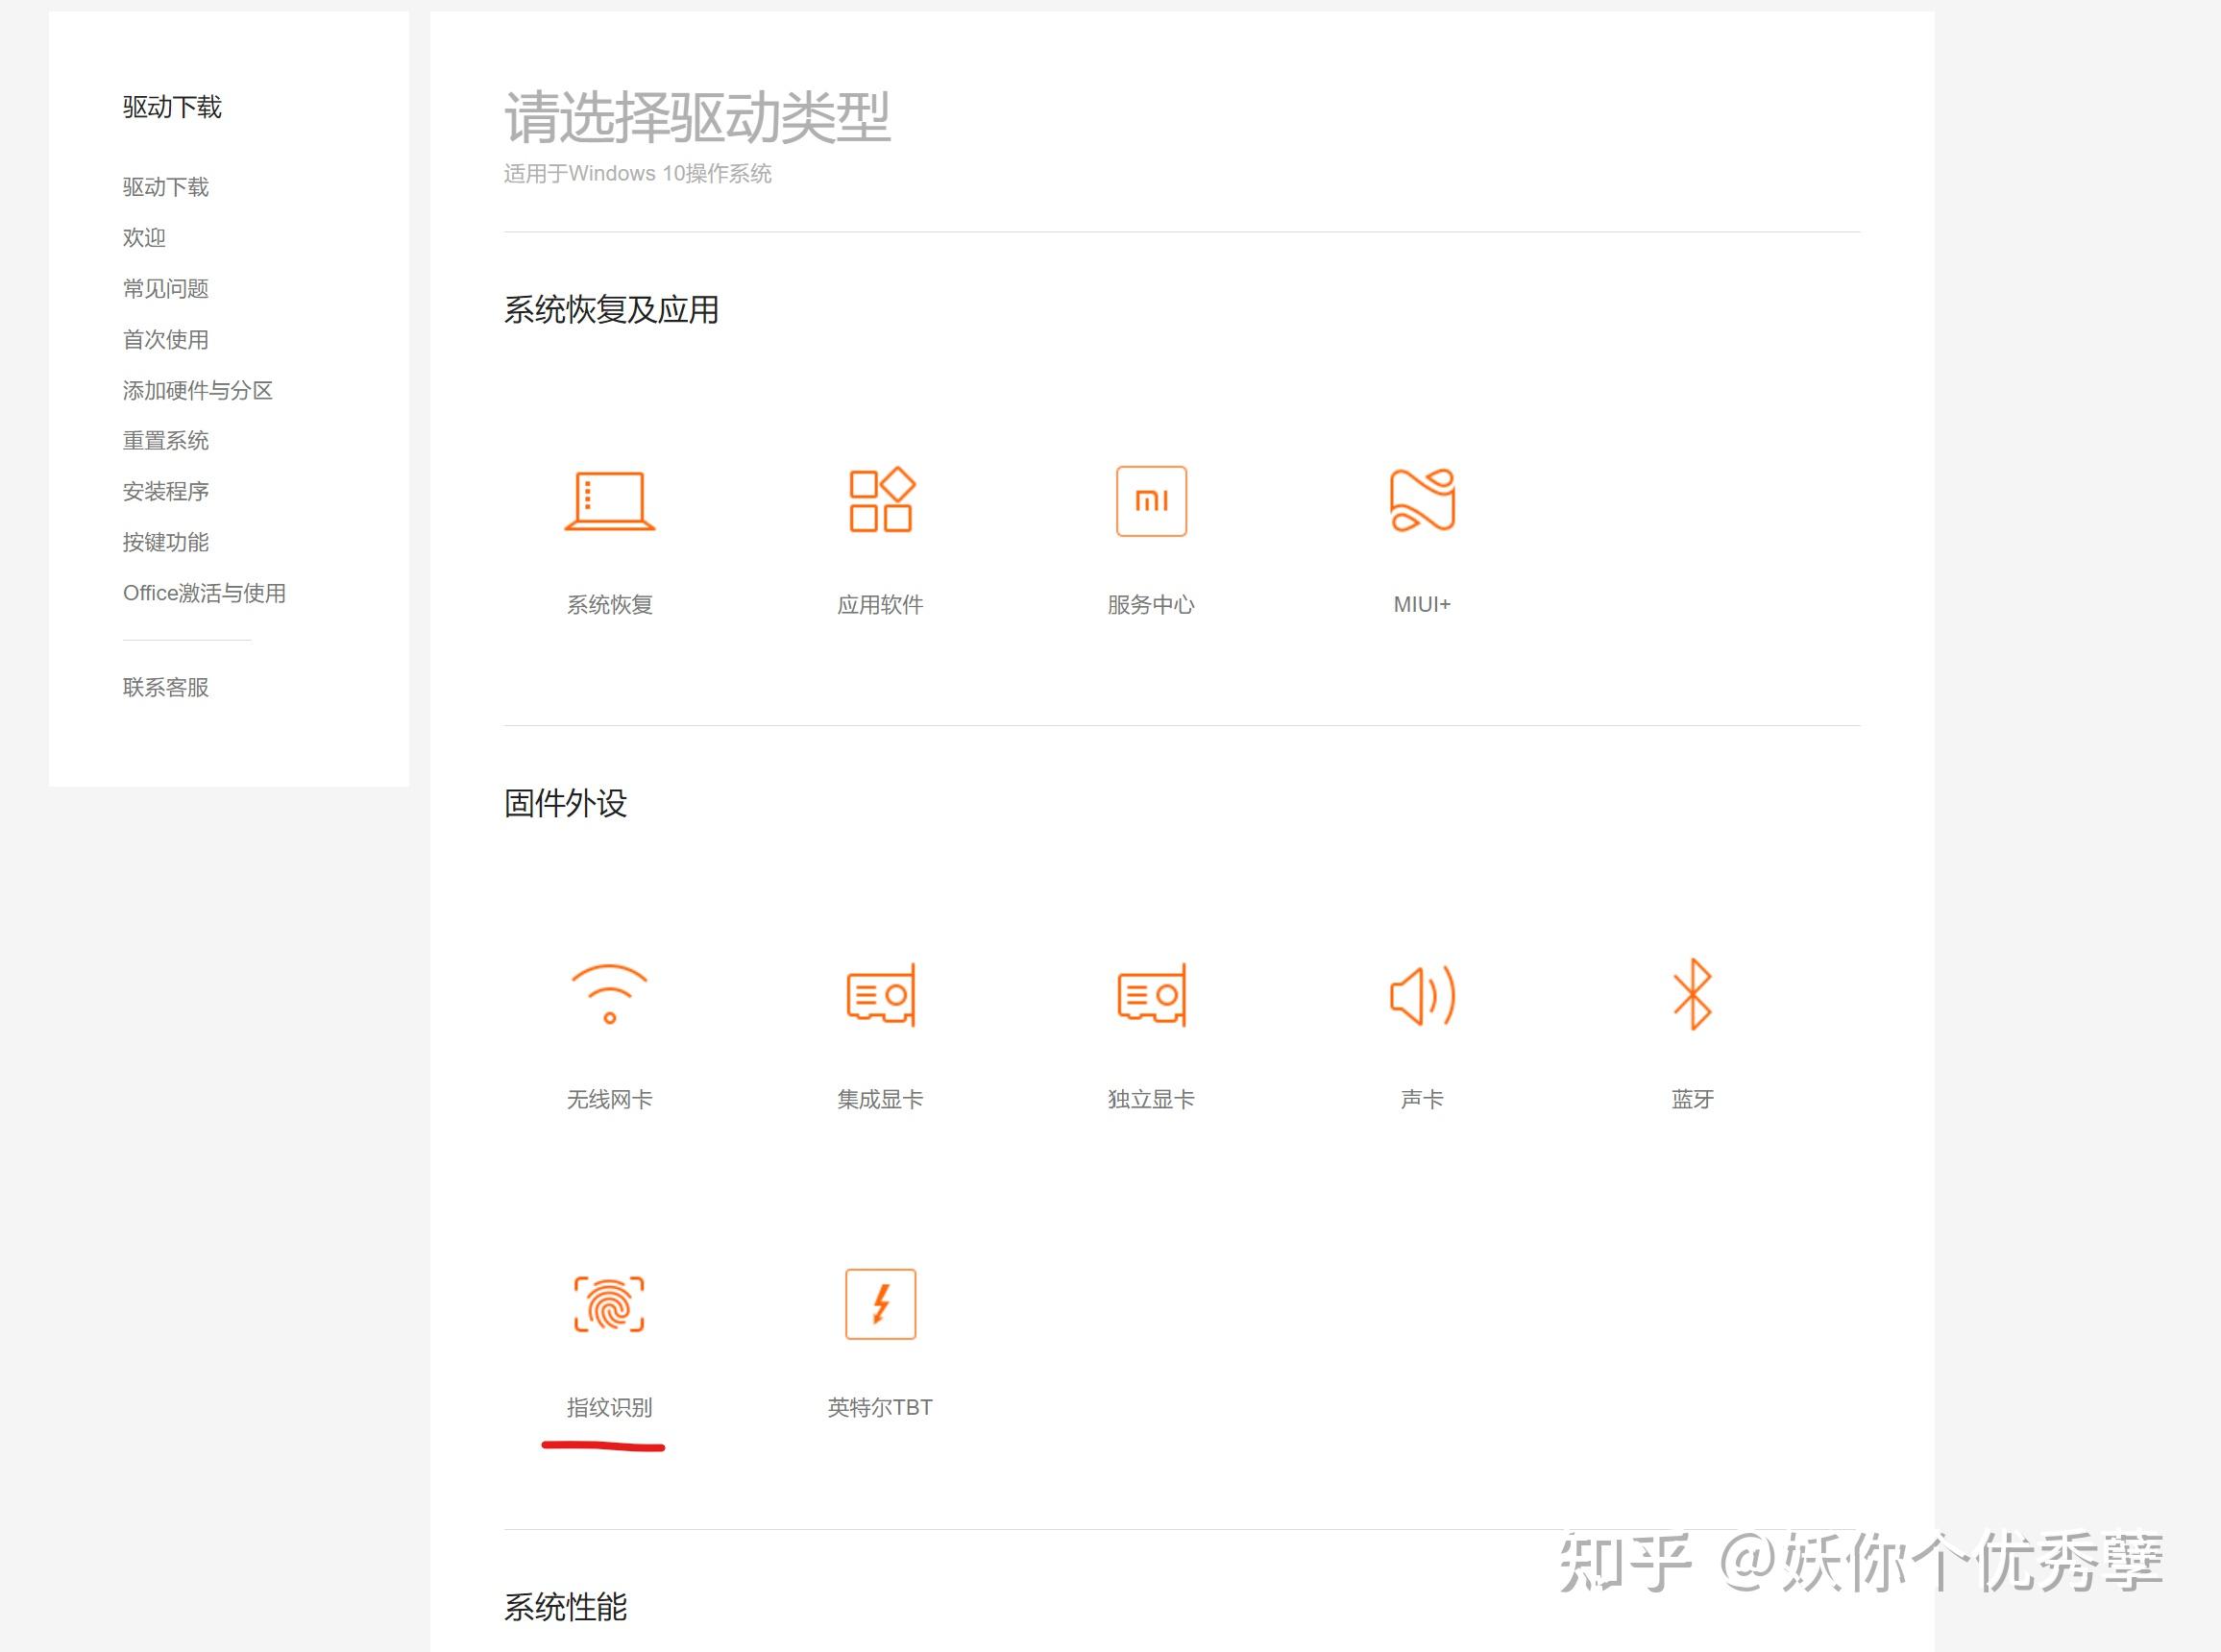 Xiaomi Mi 6X buy smartphone, compare prices in stores. Xiaomi Mi 6X - opinions, photos, video ...